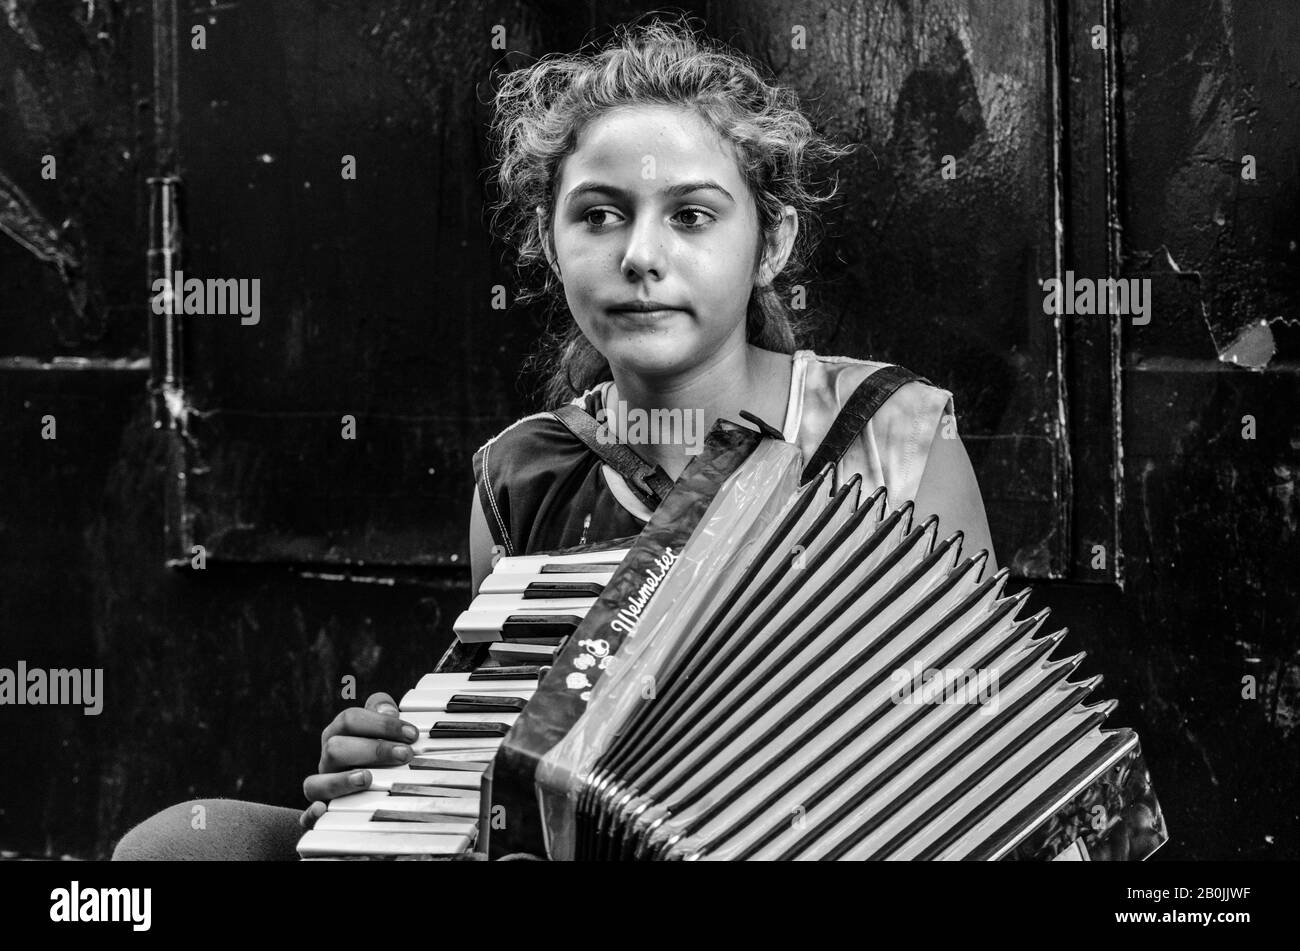 Gypsy girl street performer Stock Photo